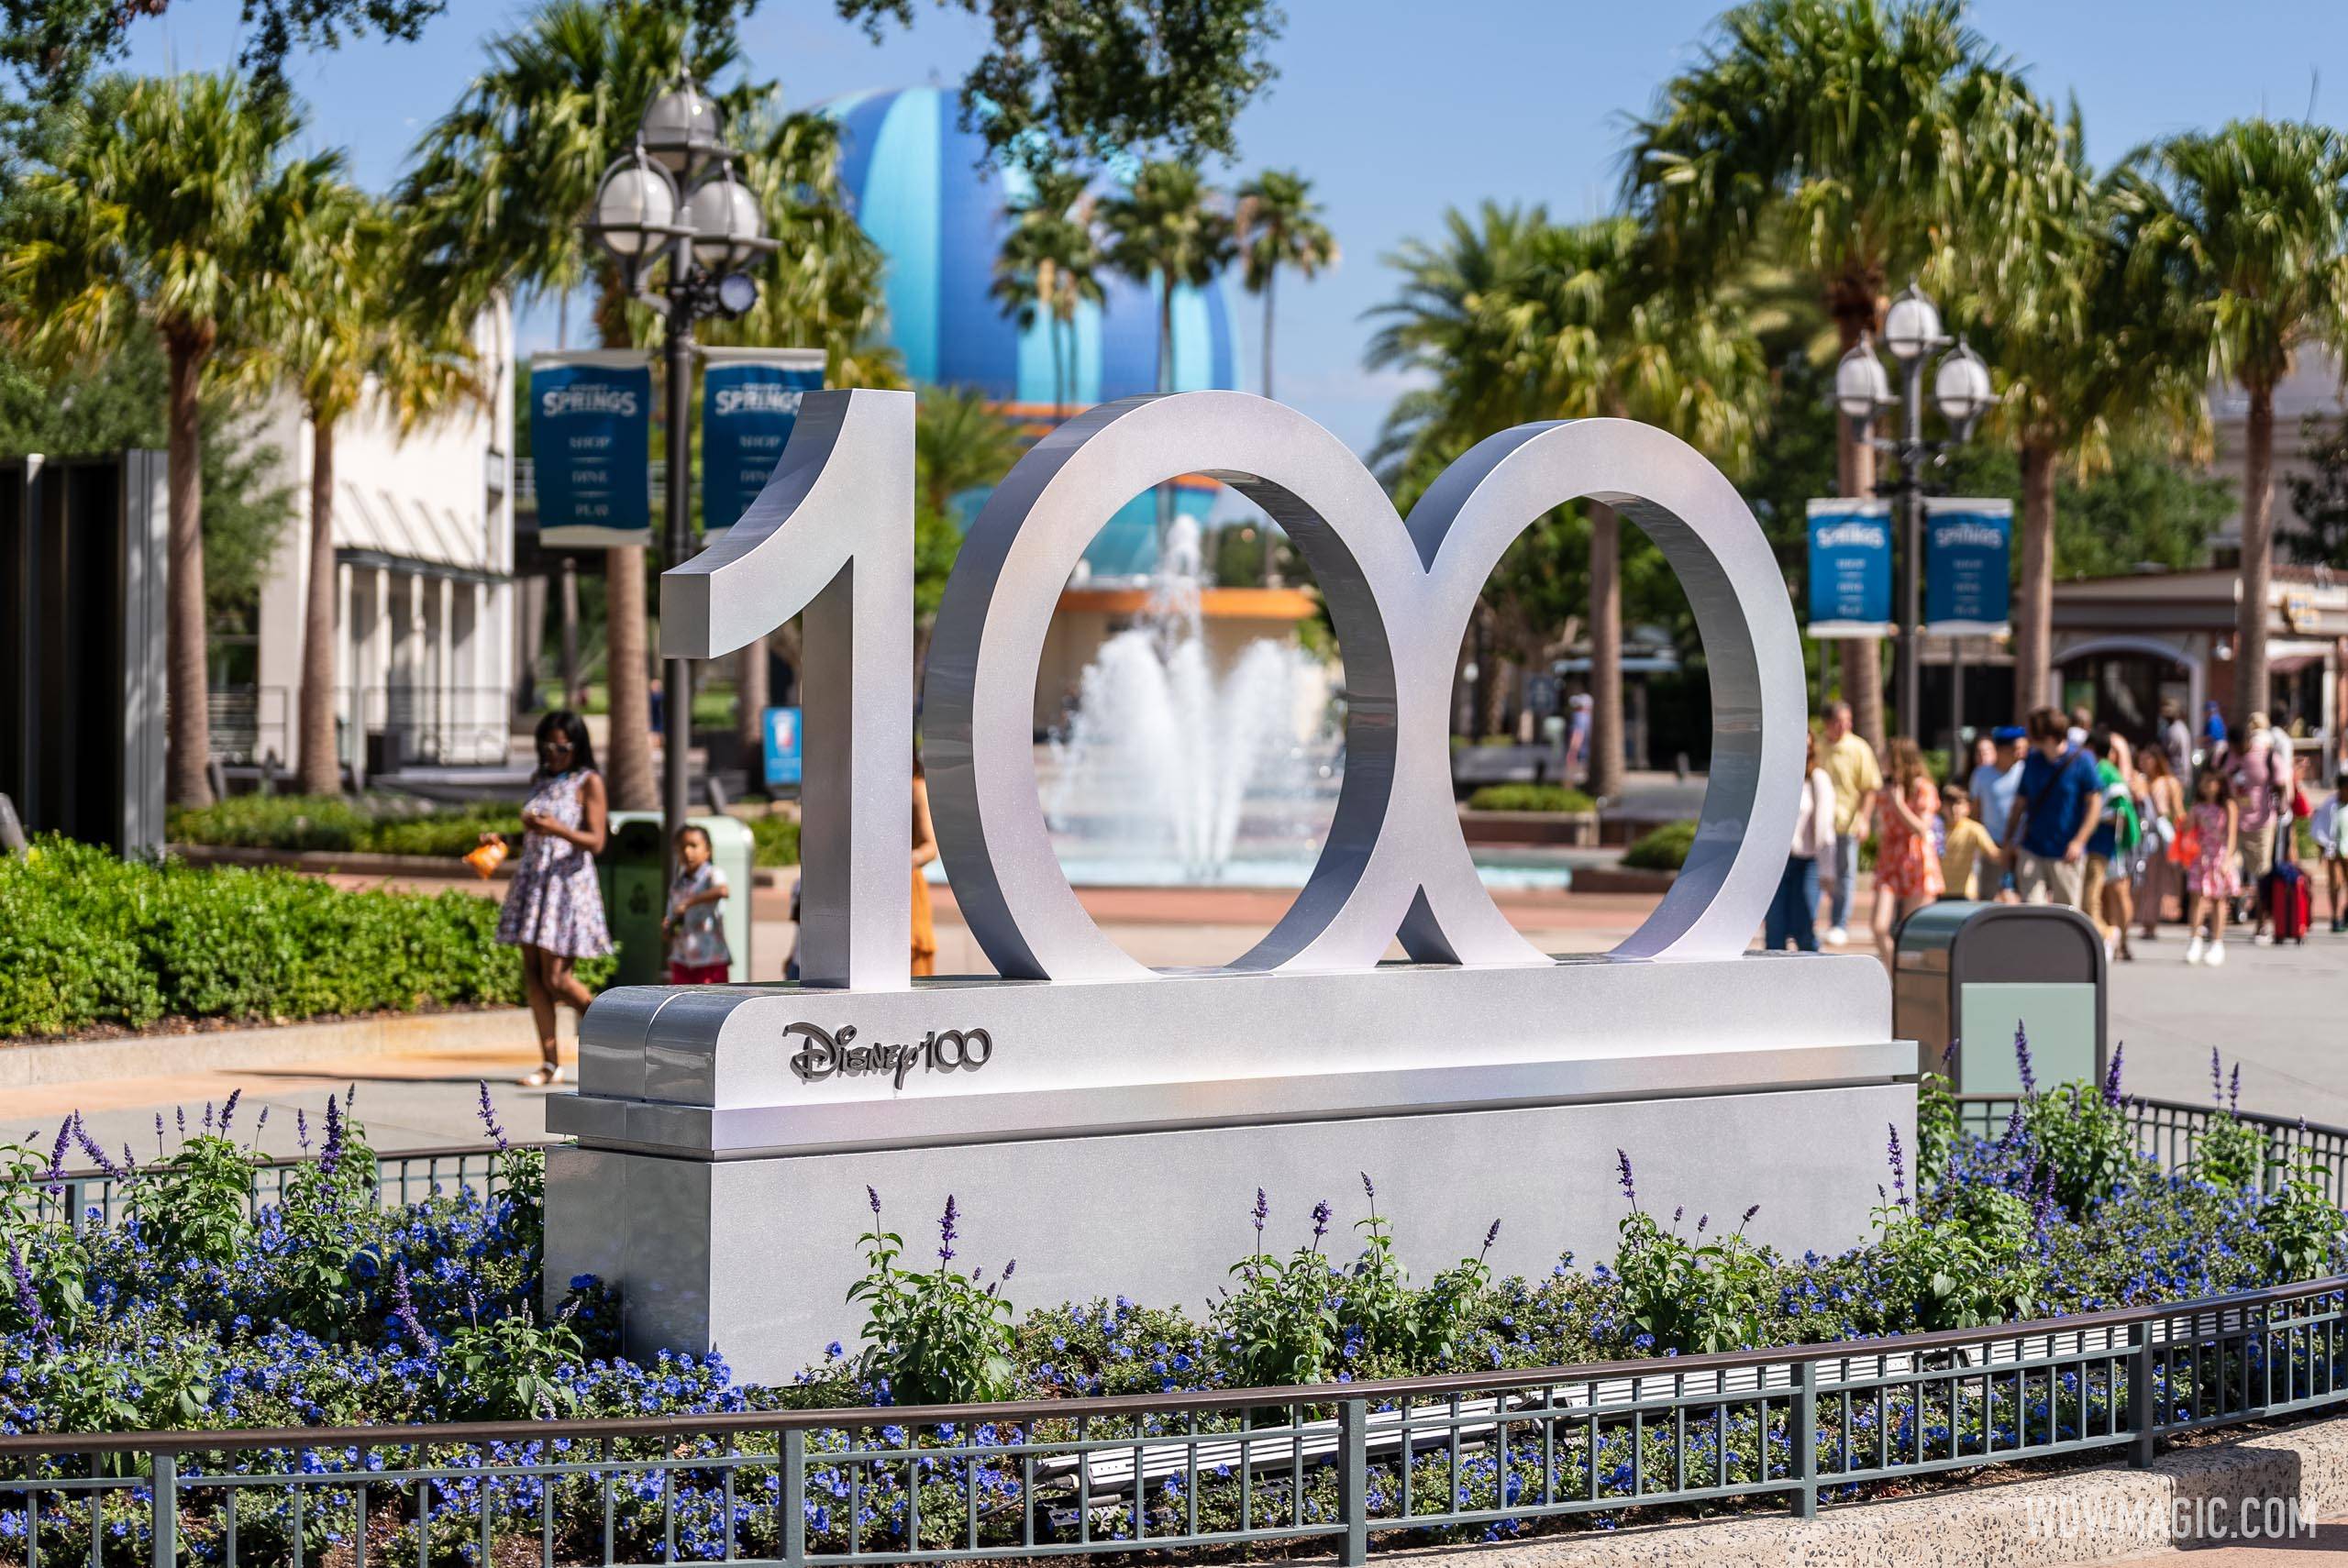 Disney100 at Disney Springs